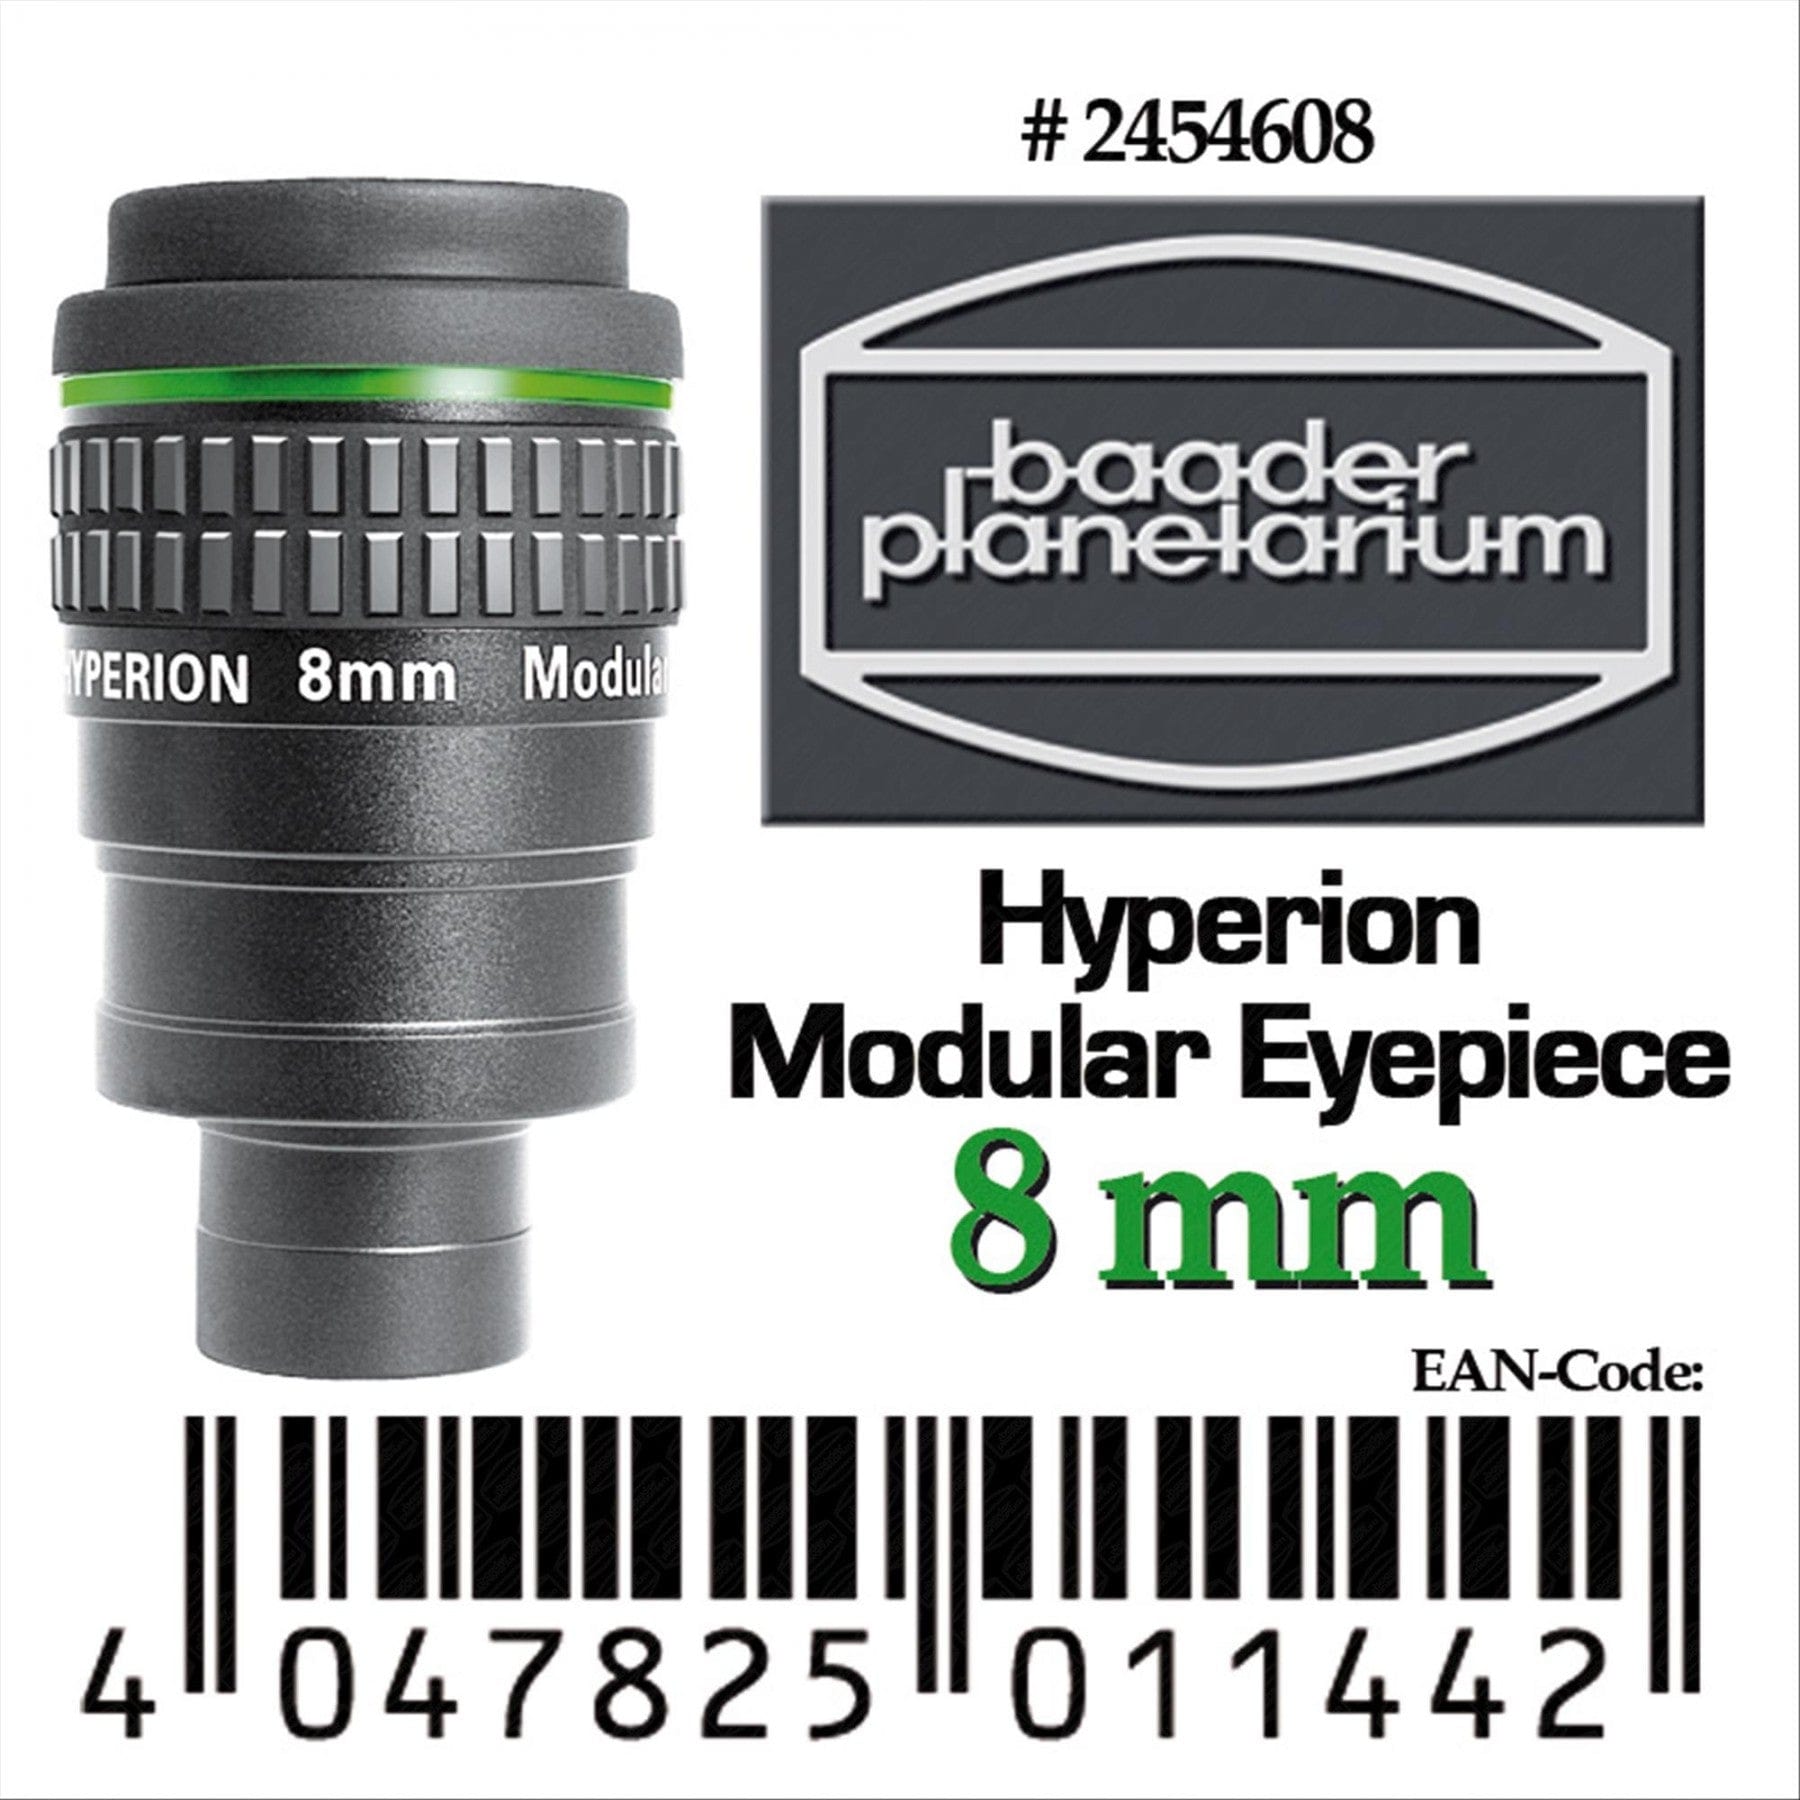 Baader Planetarium Eyepiece Baader Hyperion 8mm 68 Degree Modular Eyepiece - 2454608